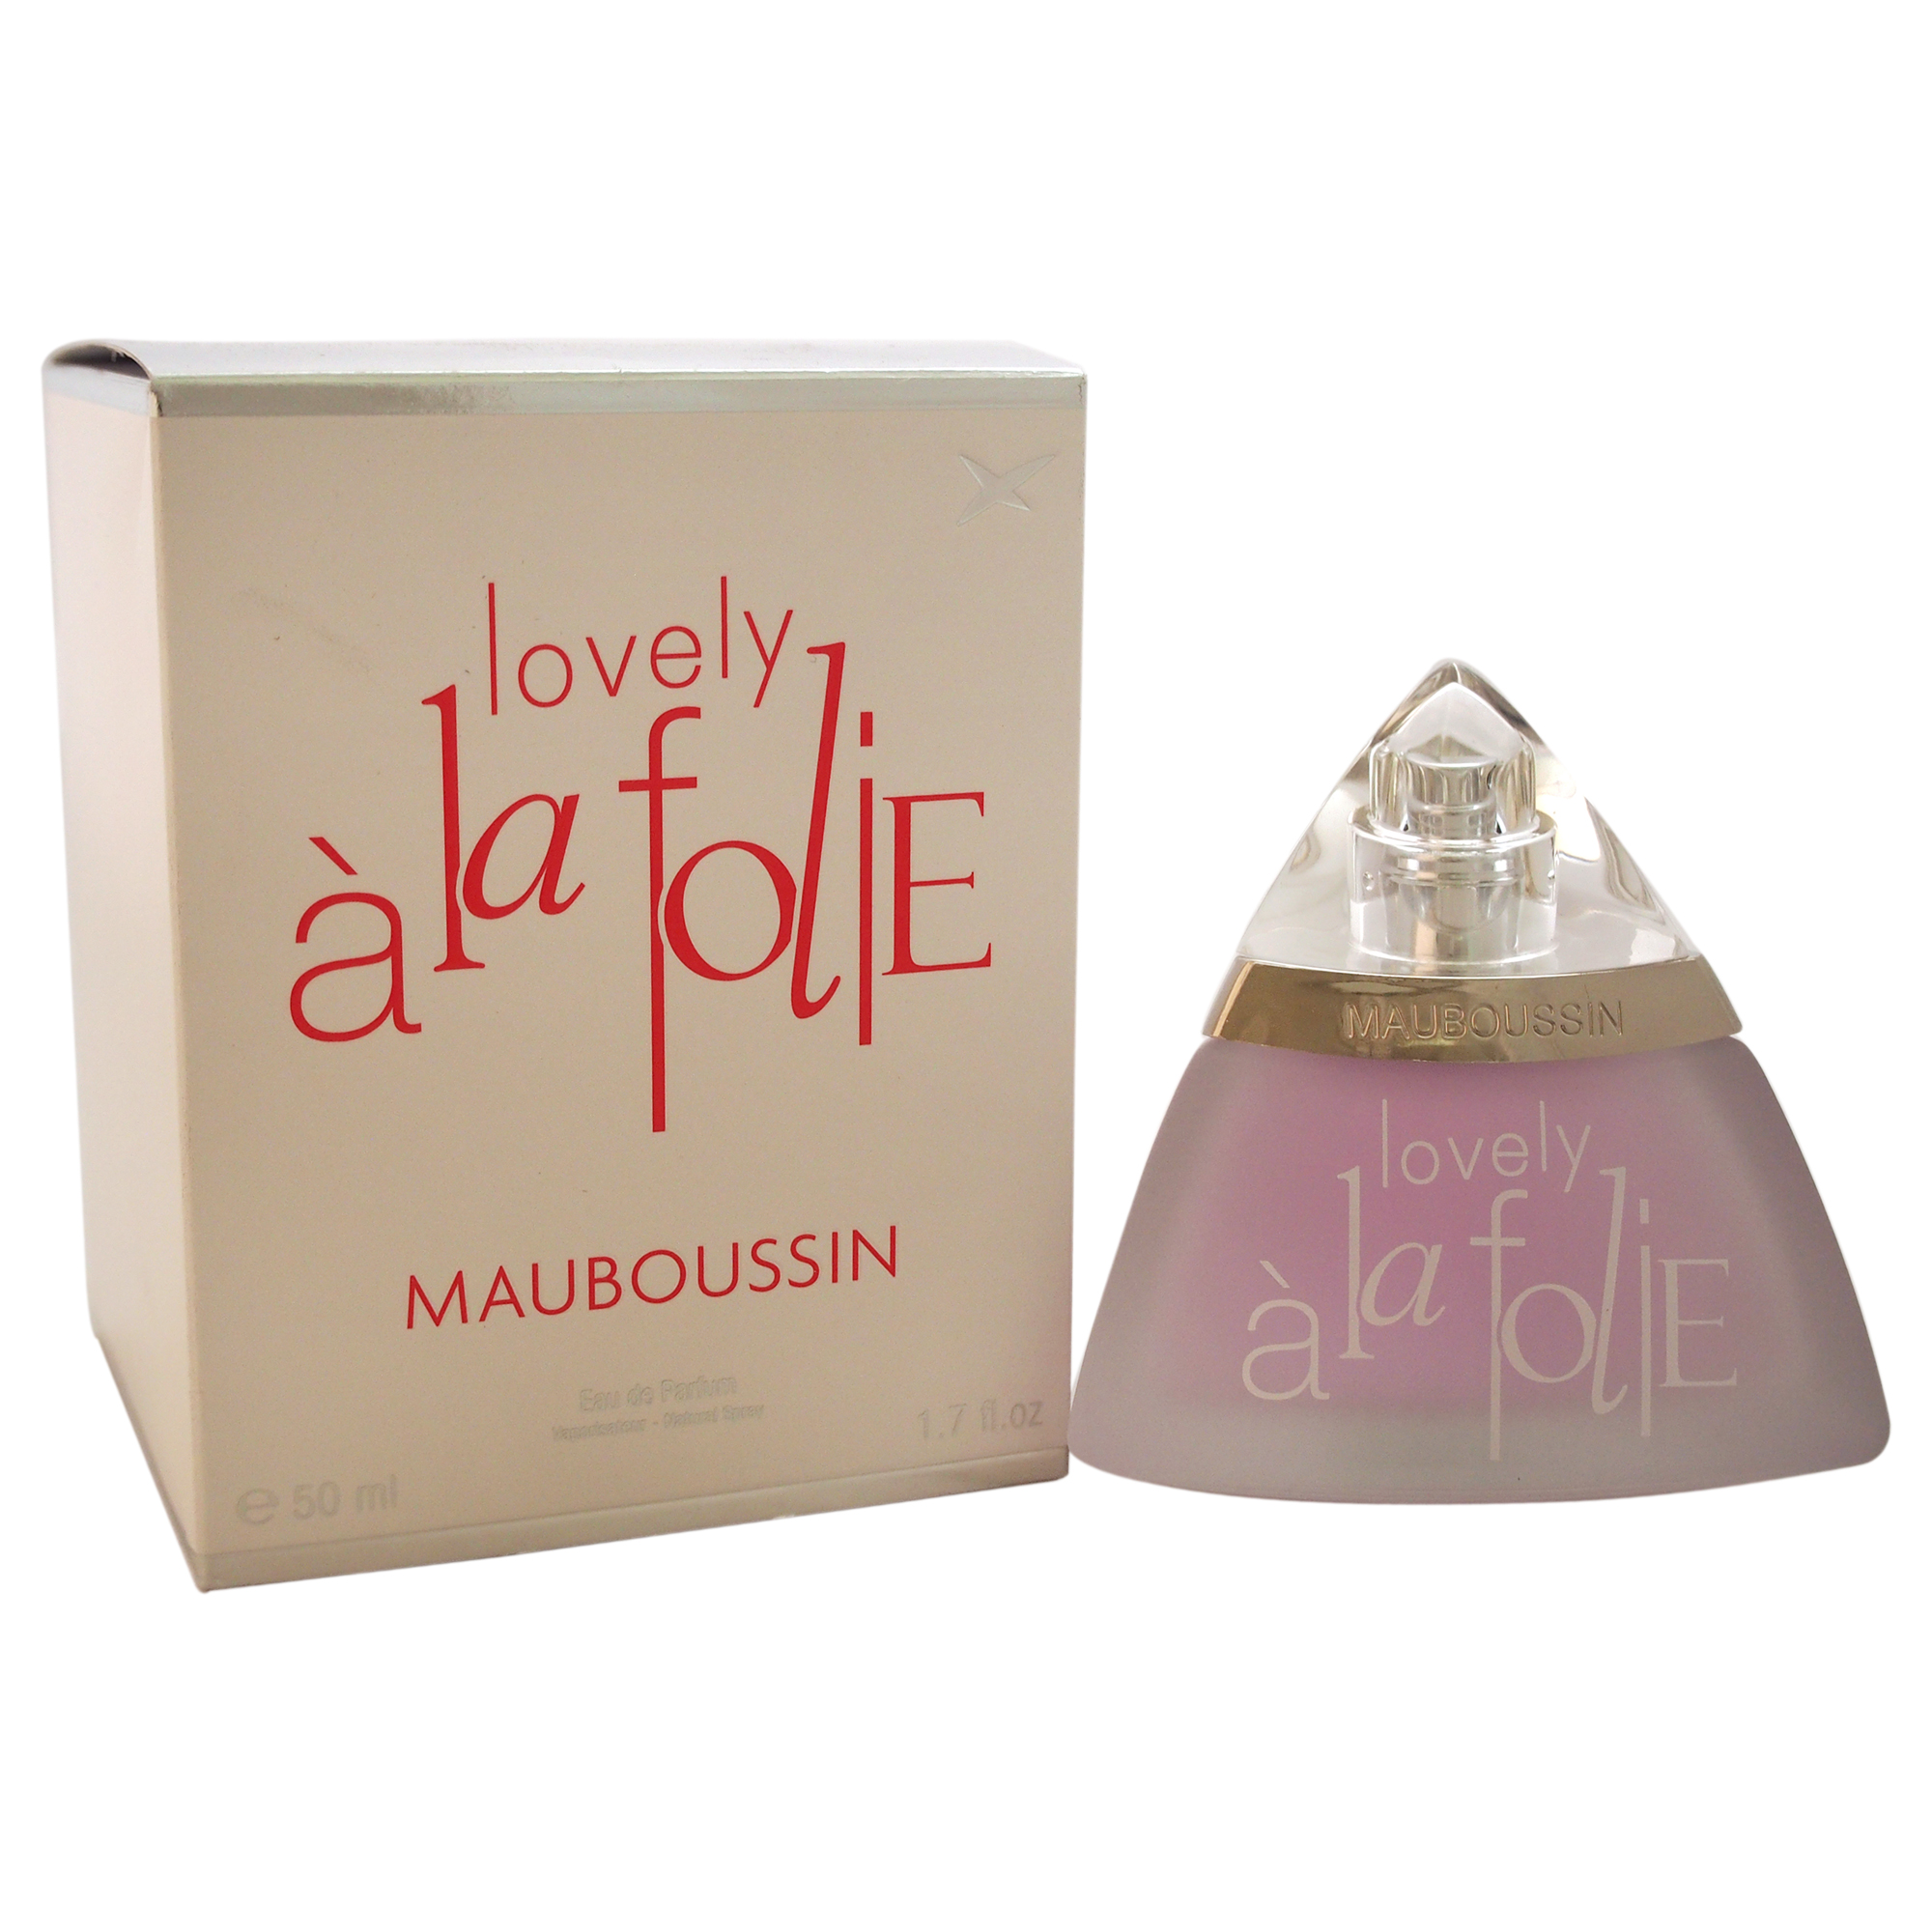 Lovely A La Folie by Mauboussin for Women - 1.7 oz EDP Spray